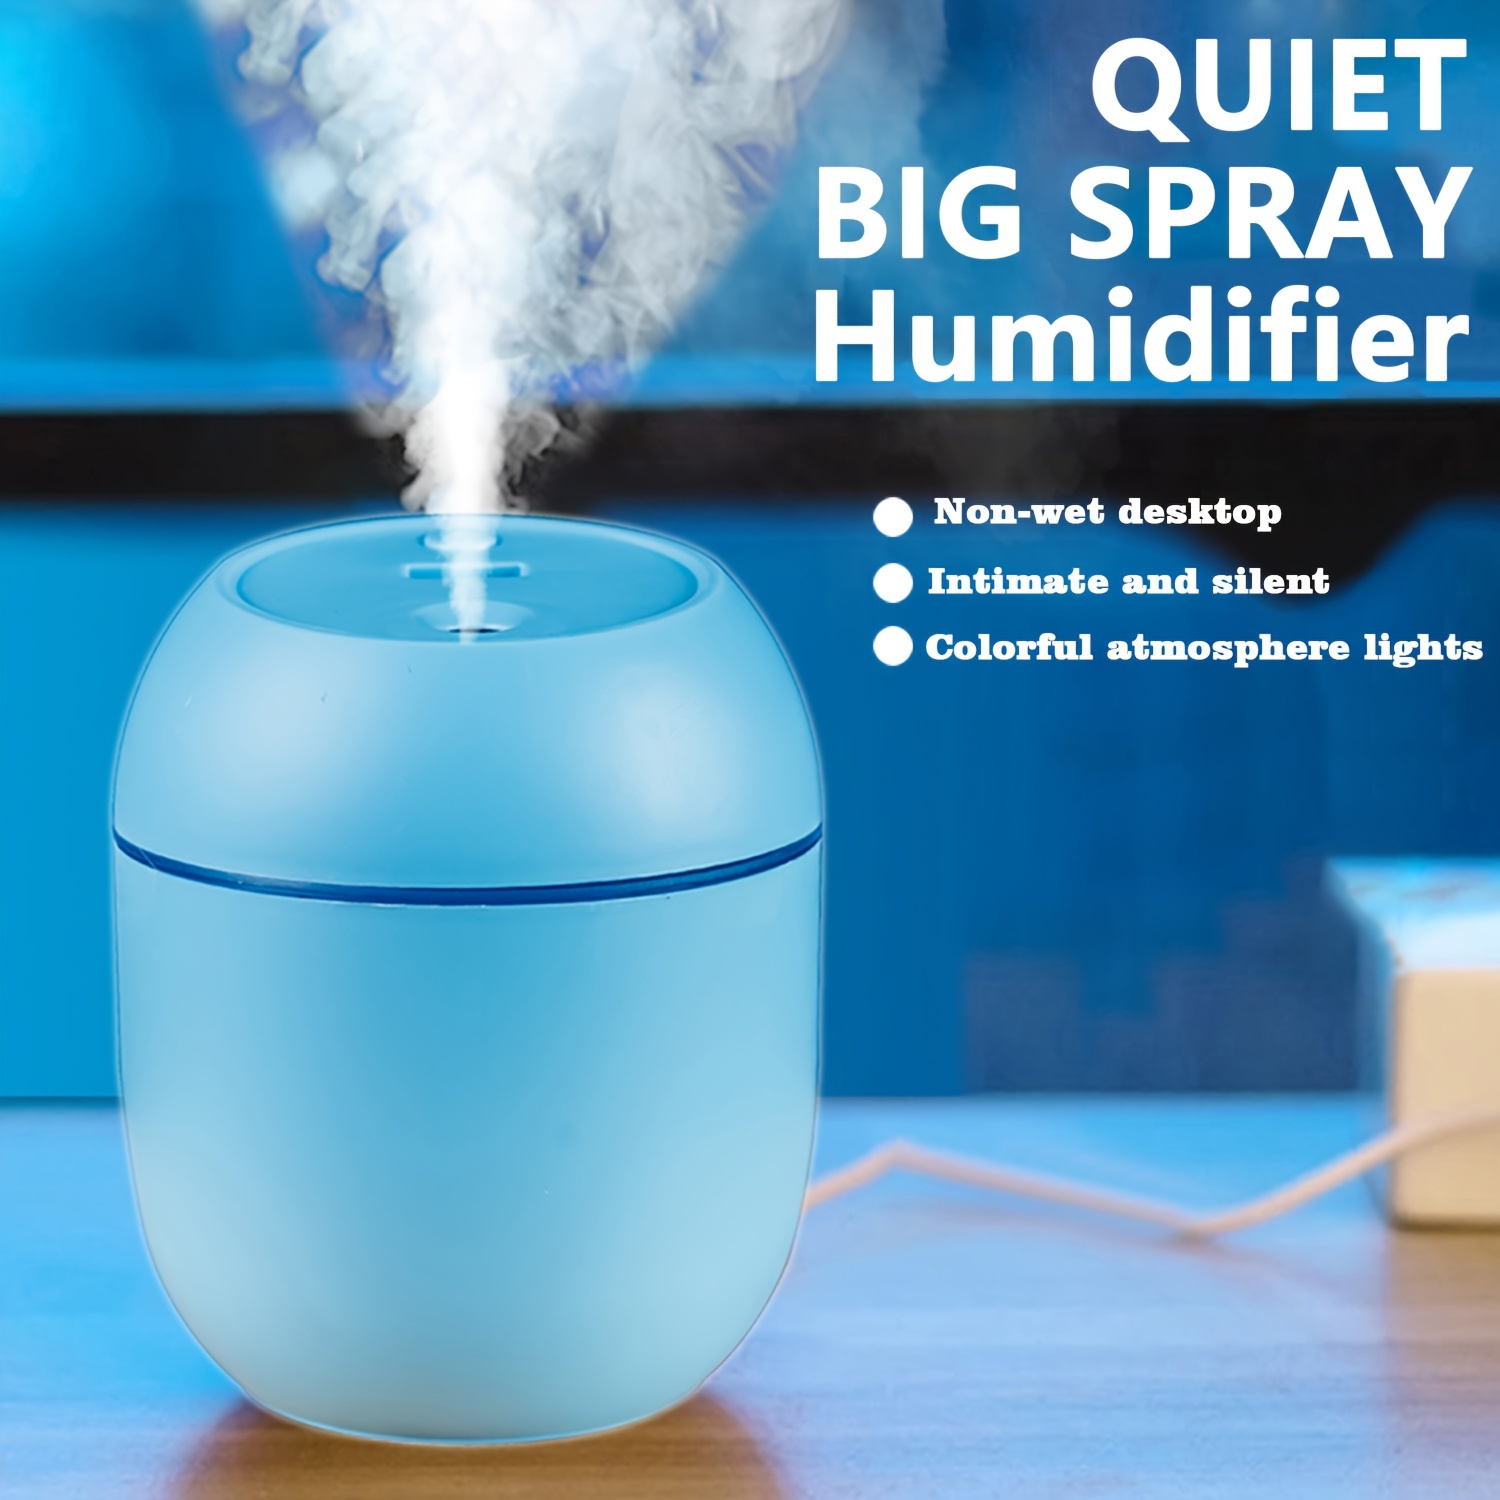 Camaterlot Smart Car Air Freshener Diffuser Humidifier w/ 4 Oils